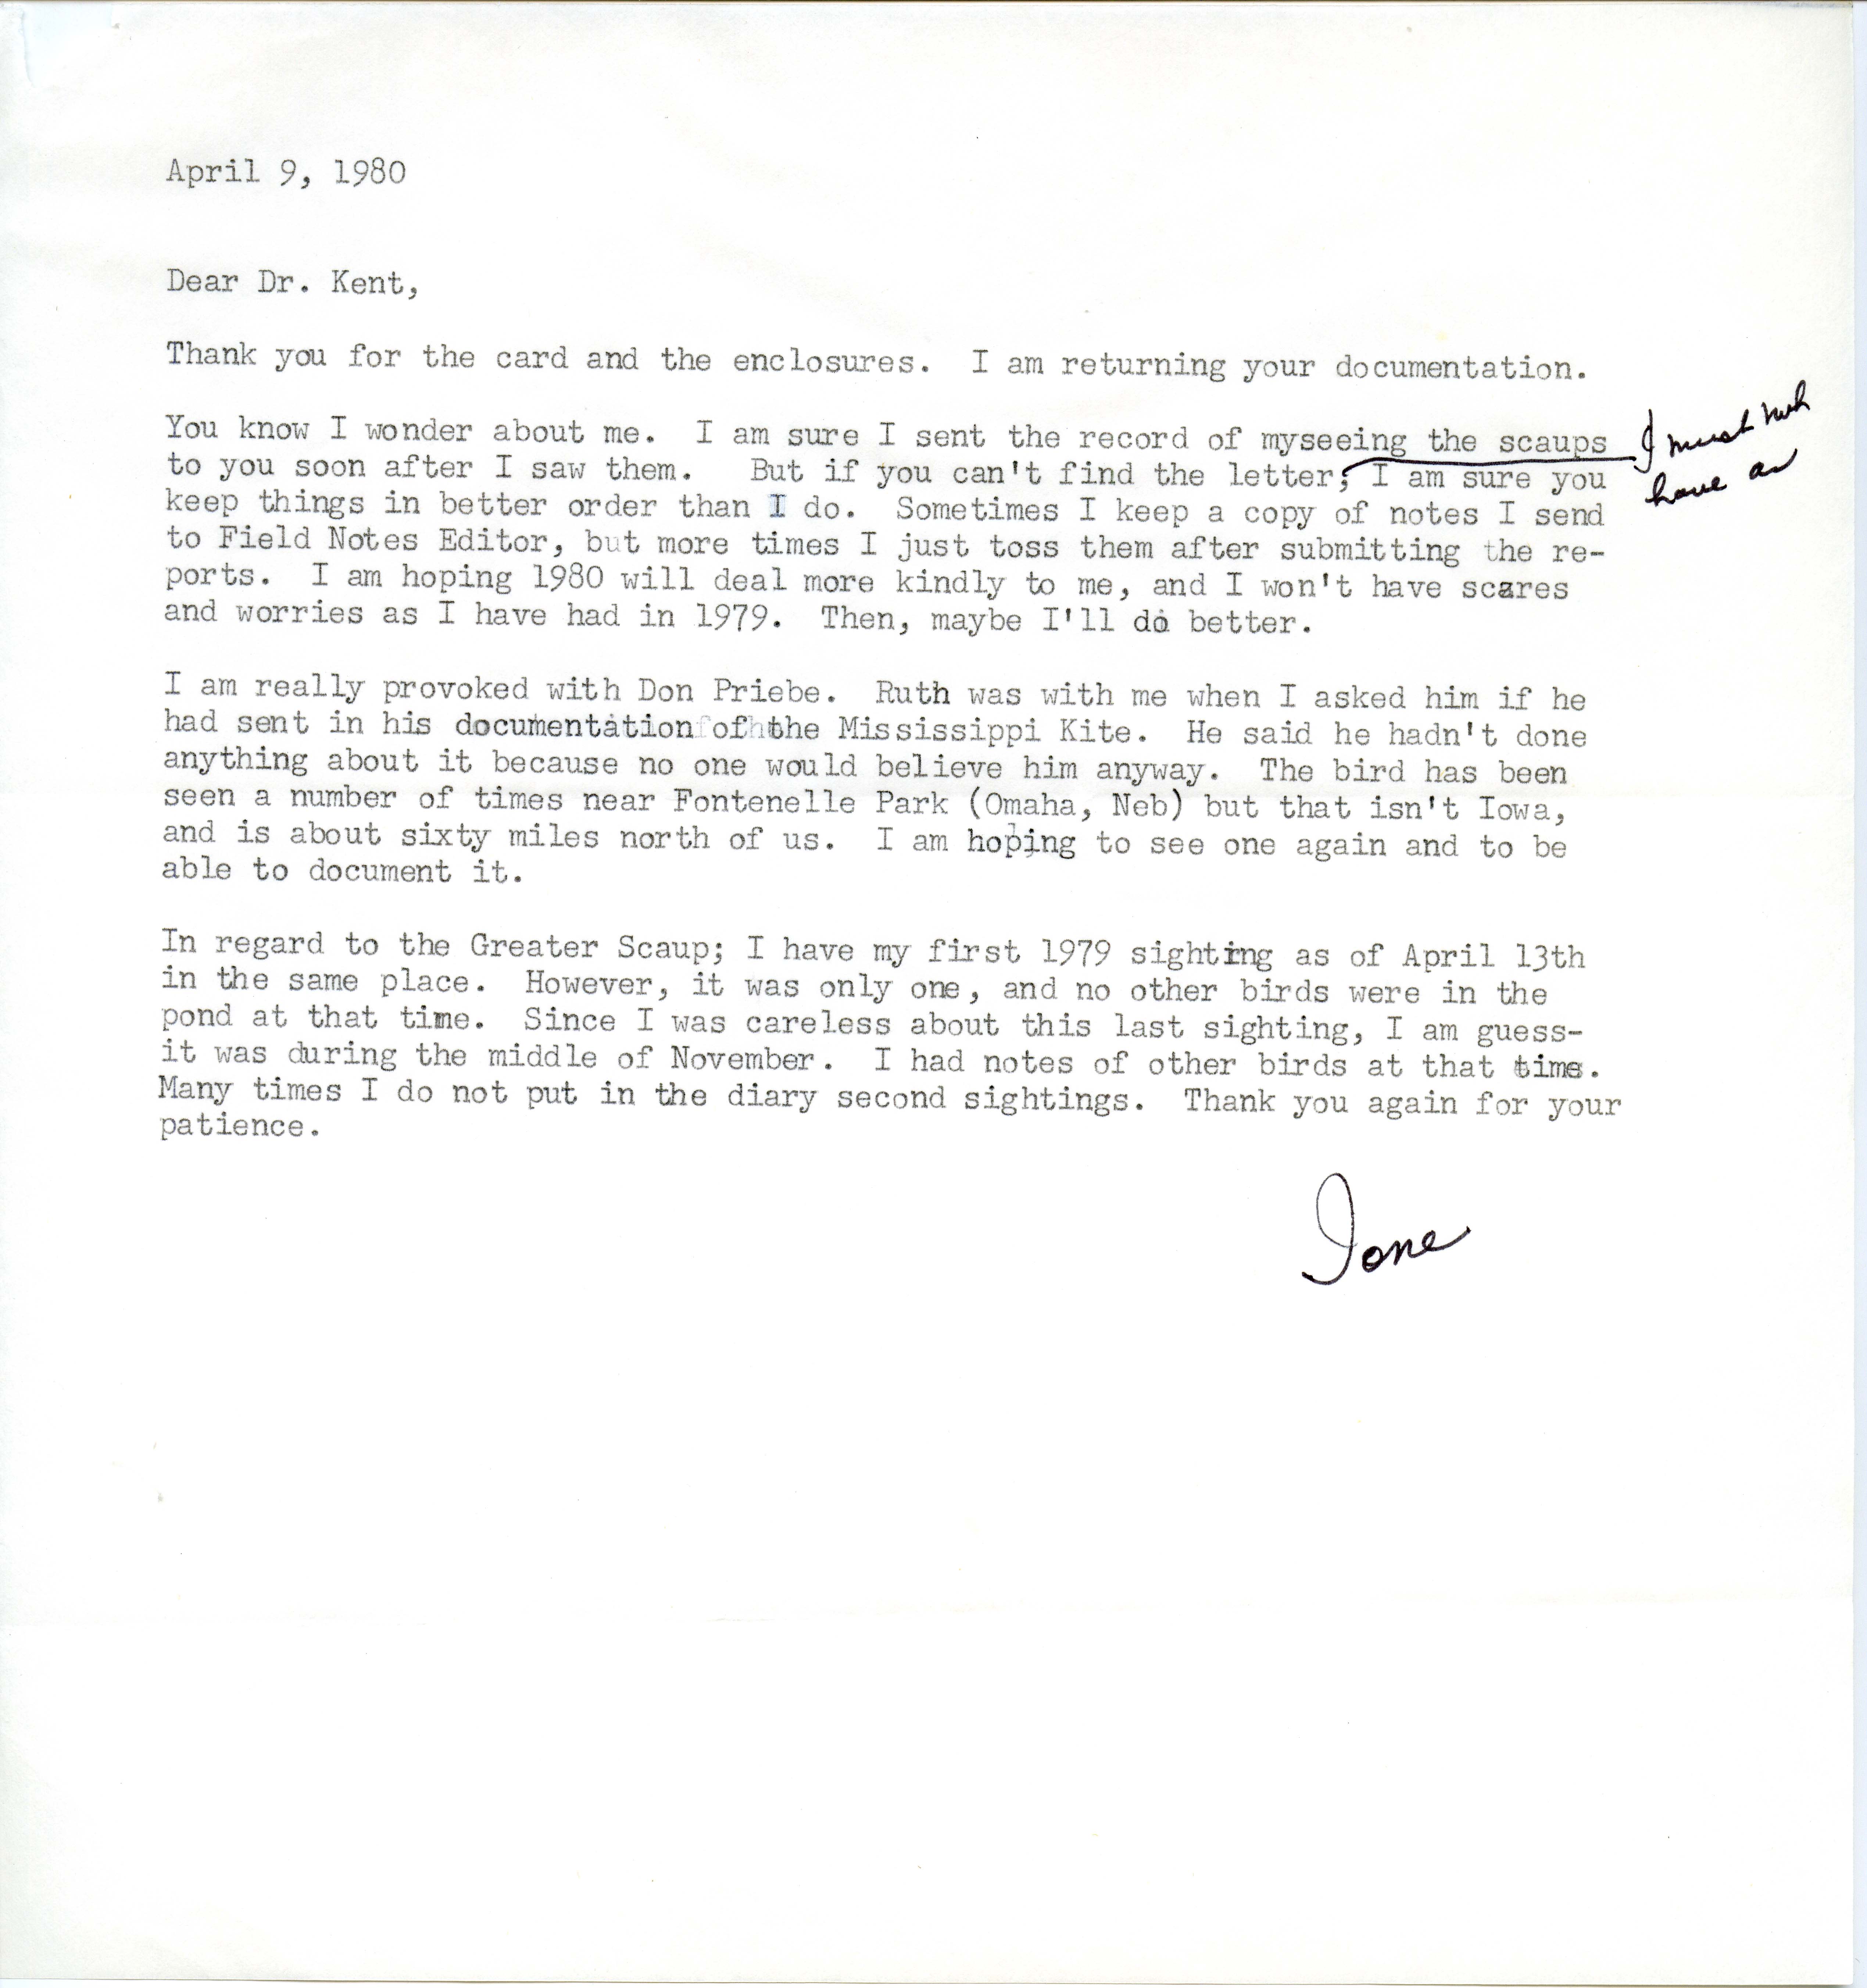 Ione Getscher letter to Thomas H. Kent regarding bird sightings, April, 9, 1980